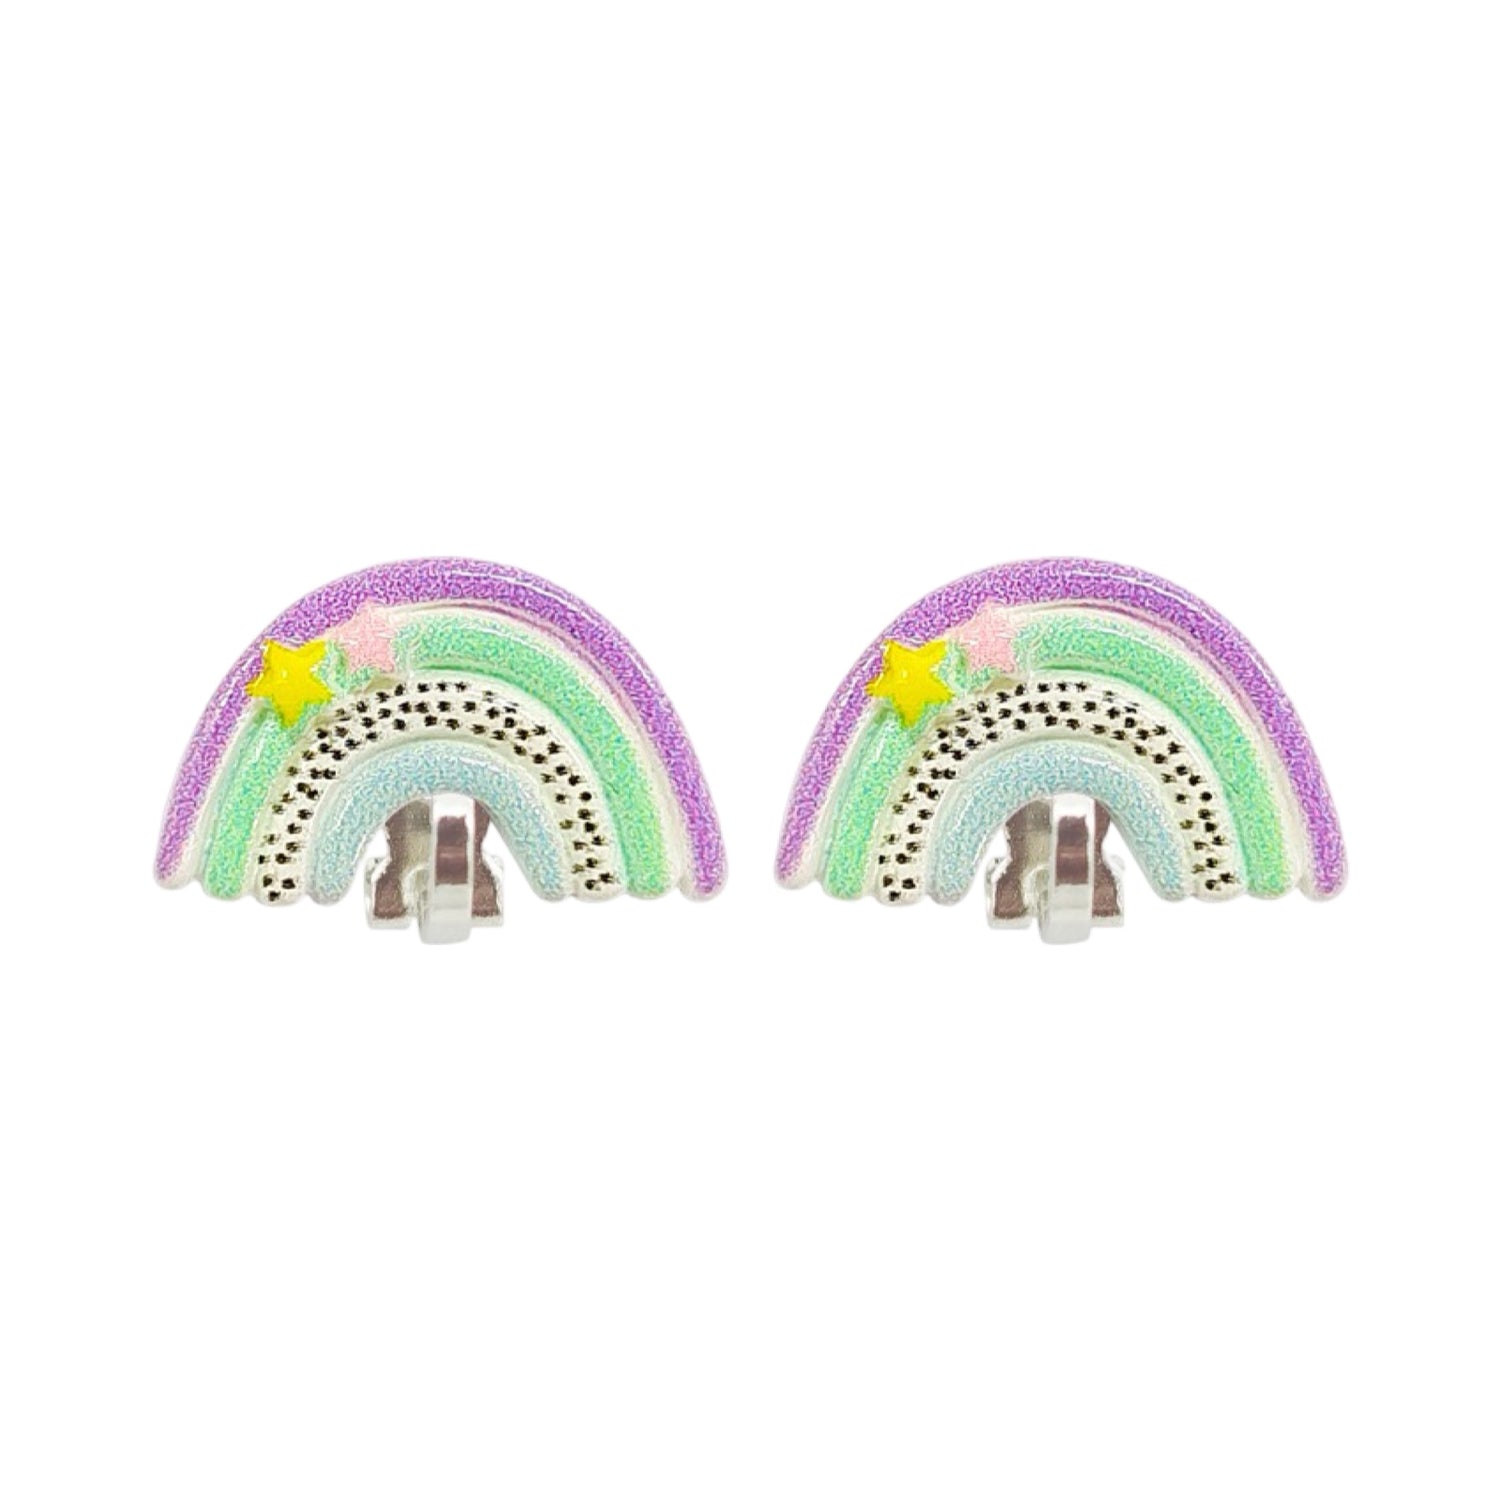 Clip earrings: Rainbow pastel